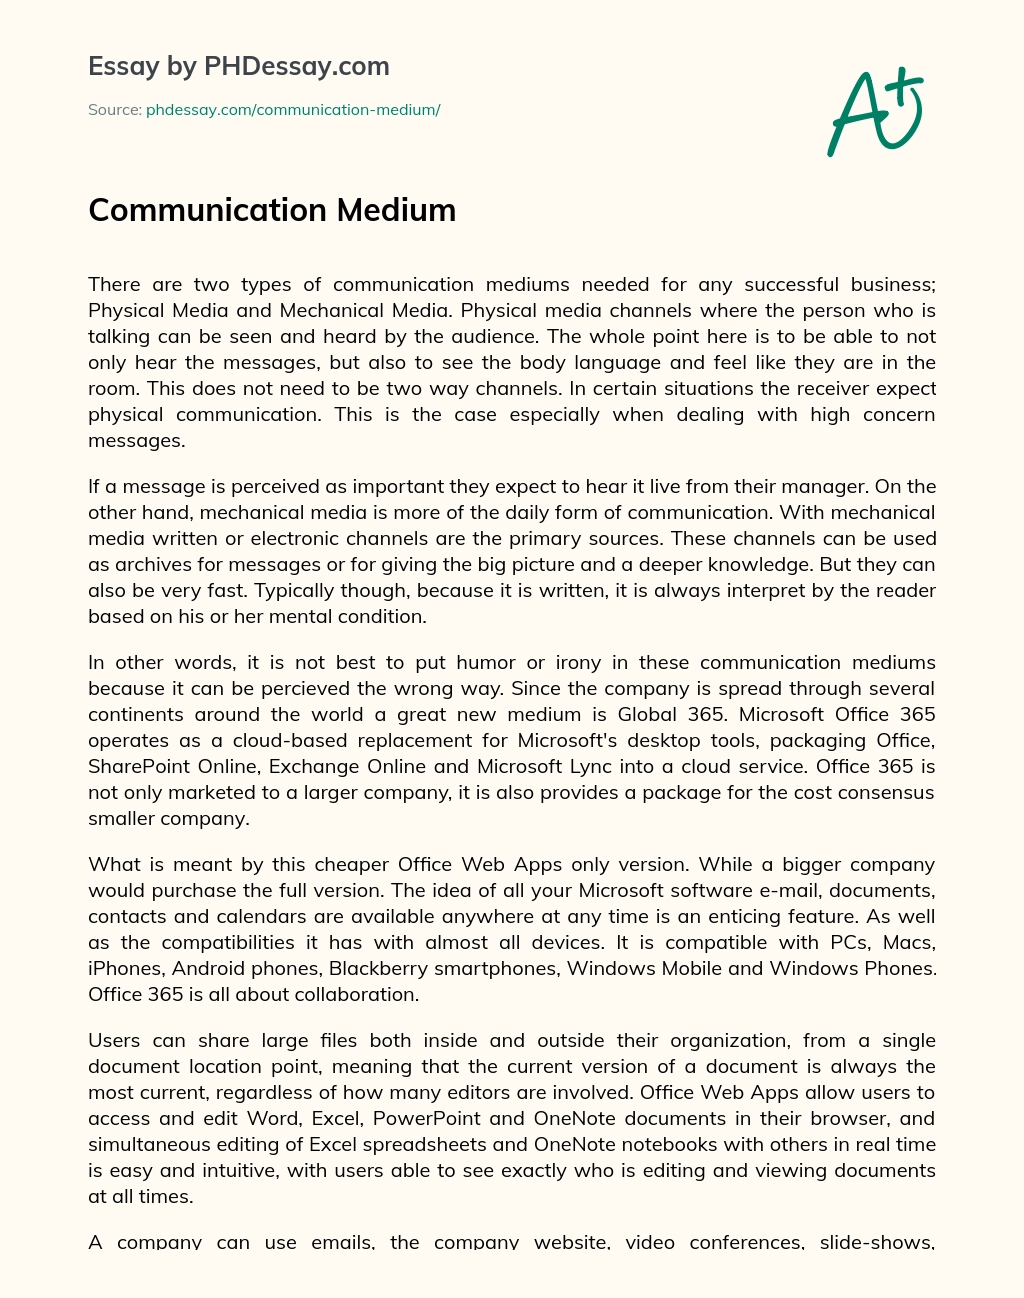 essay on communication medium